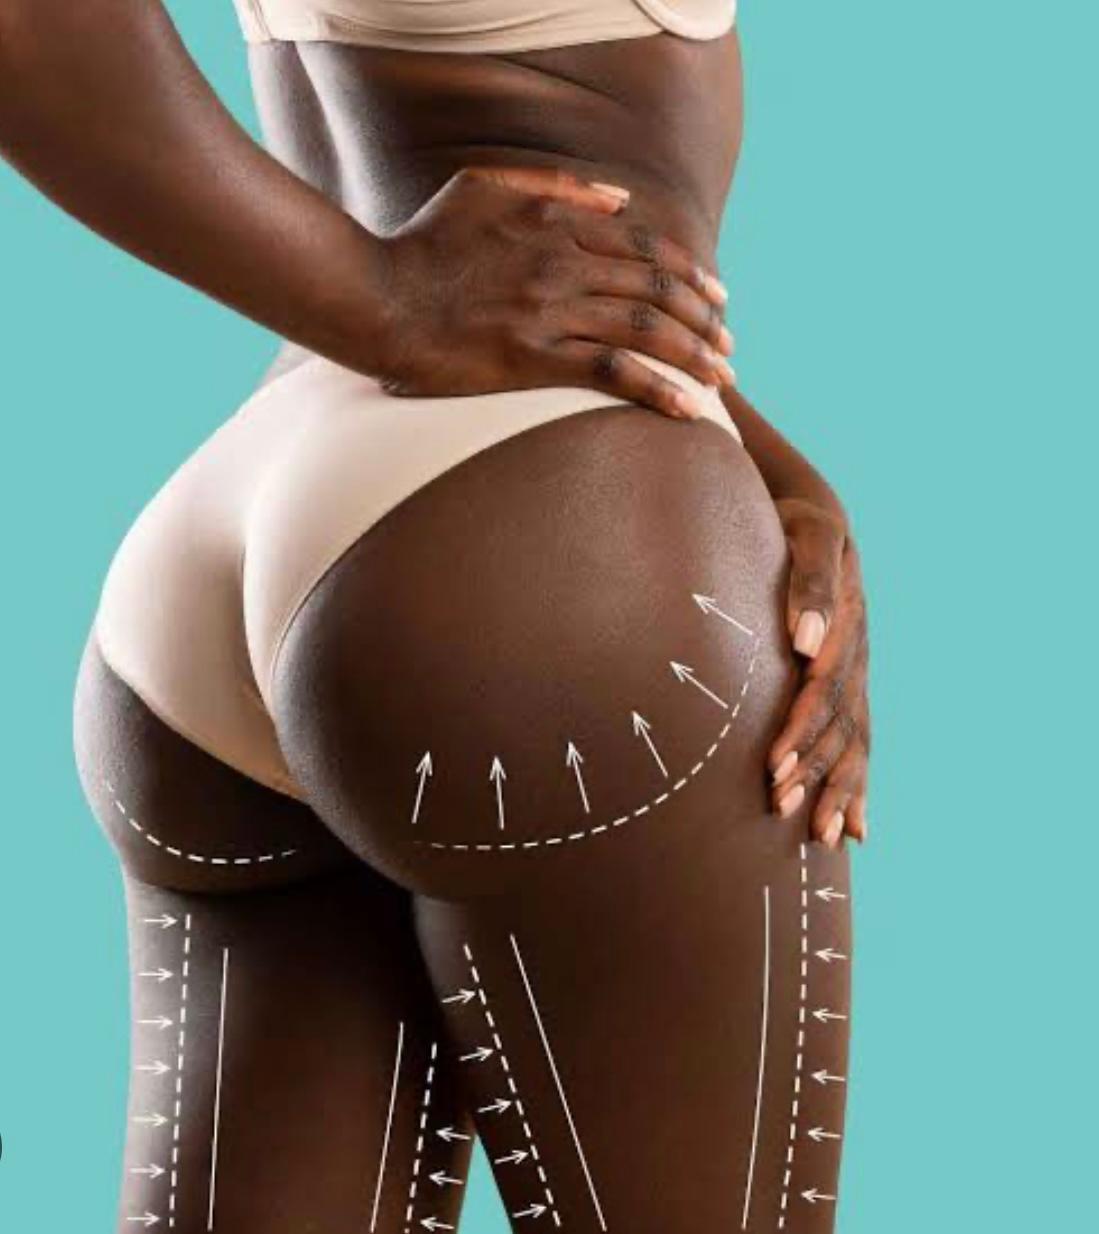 Do Men Prefer BBL Surgeries Over Natural Curves? 5 Nigerian Men